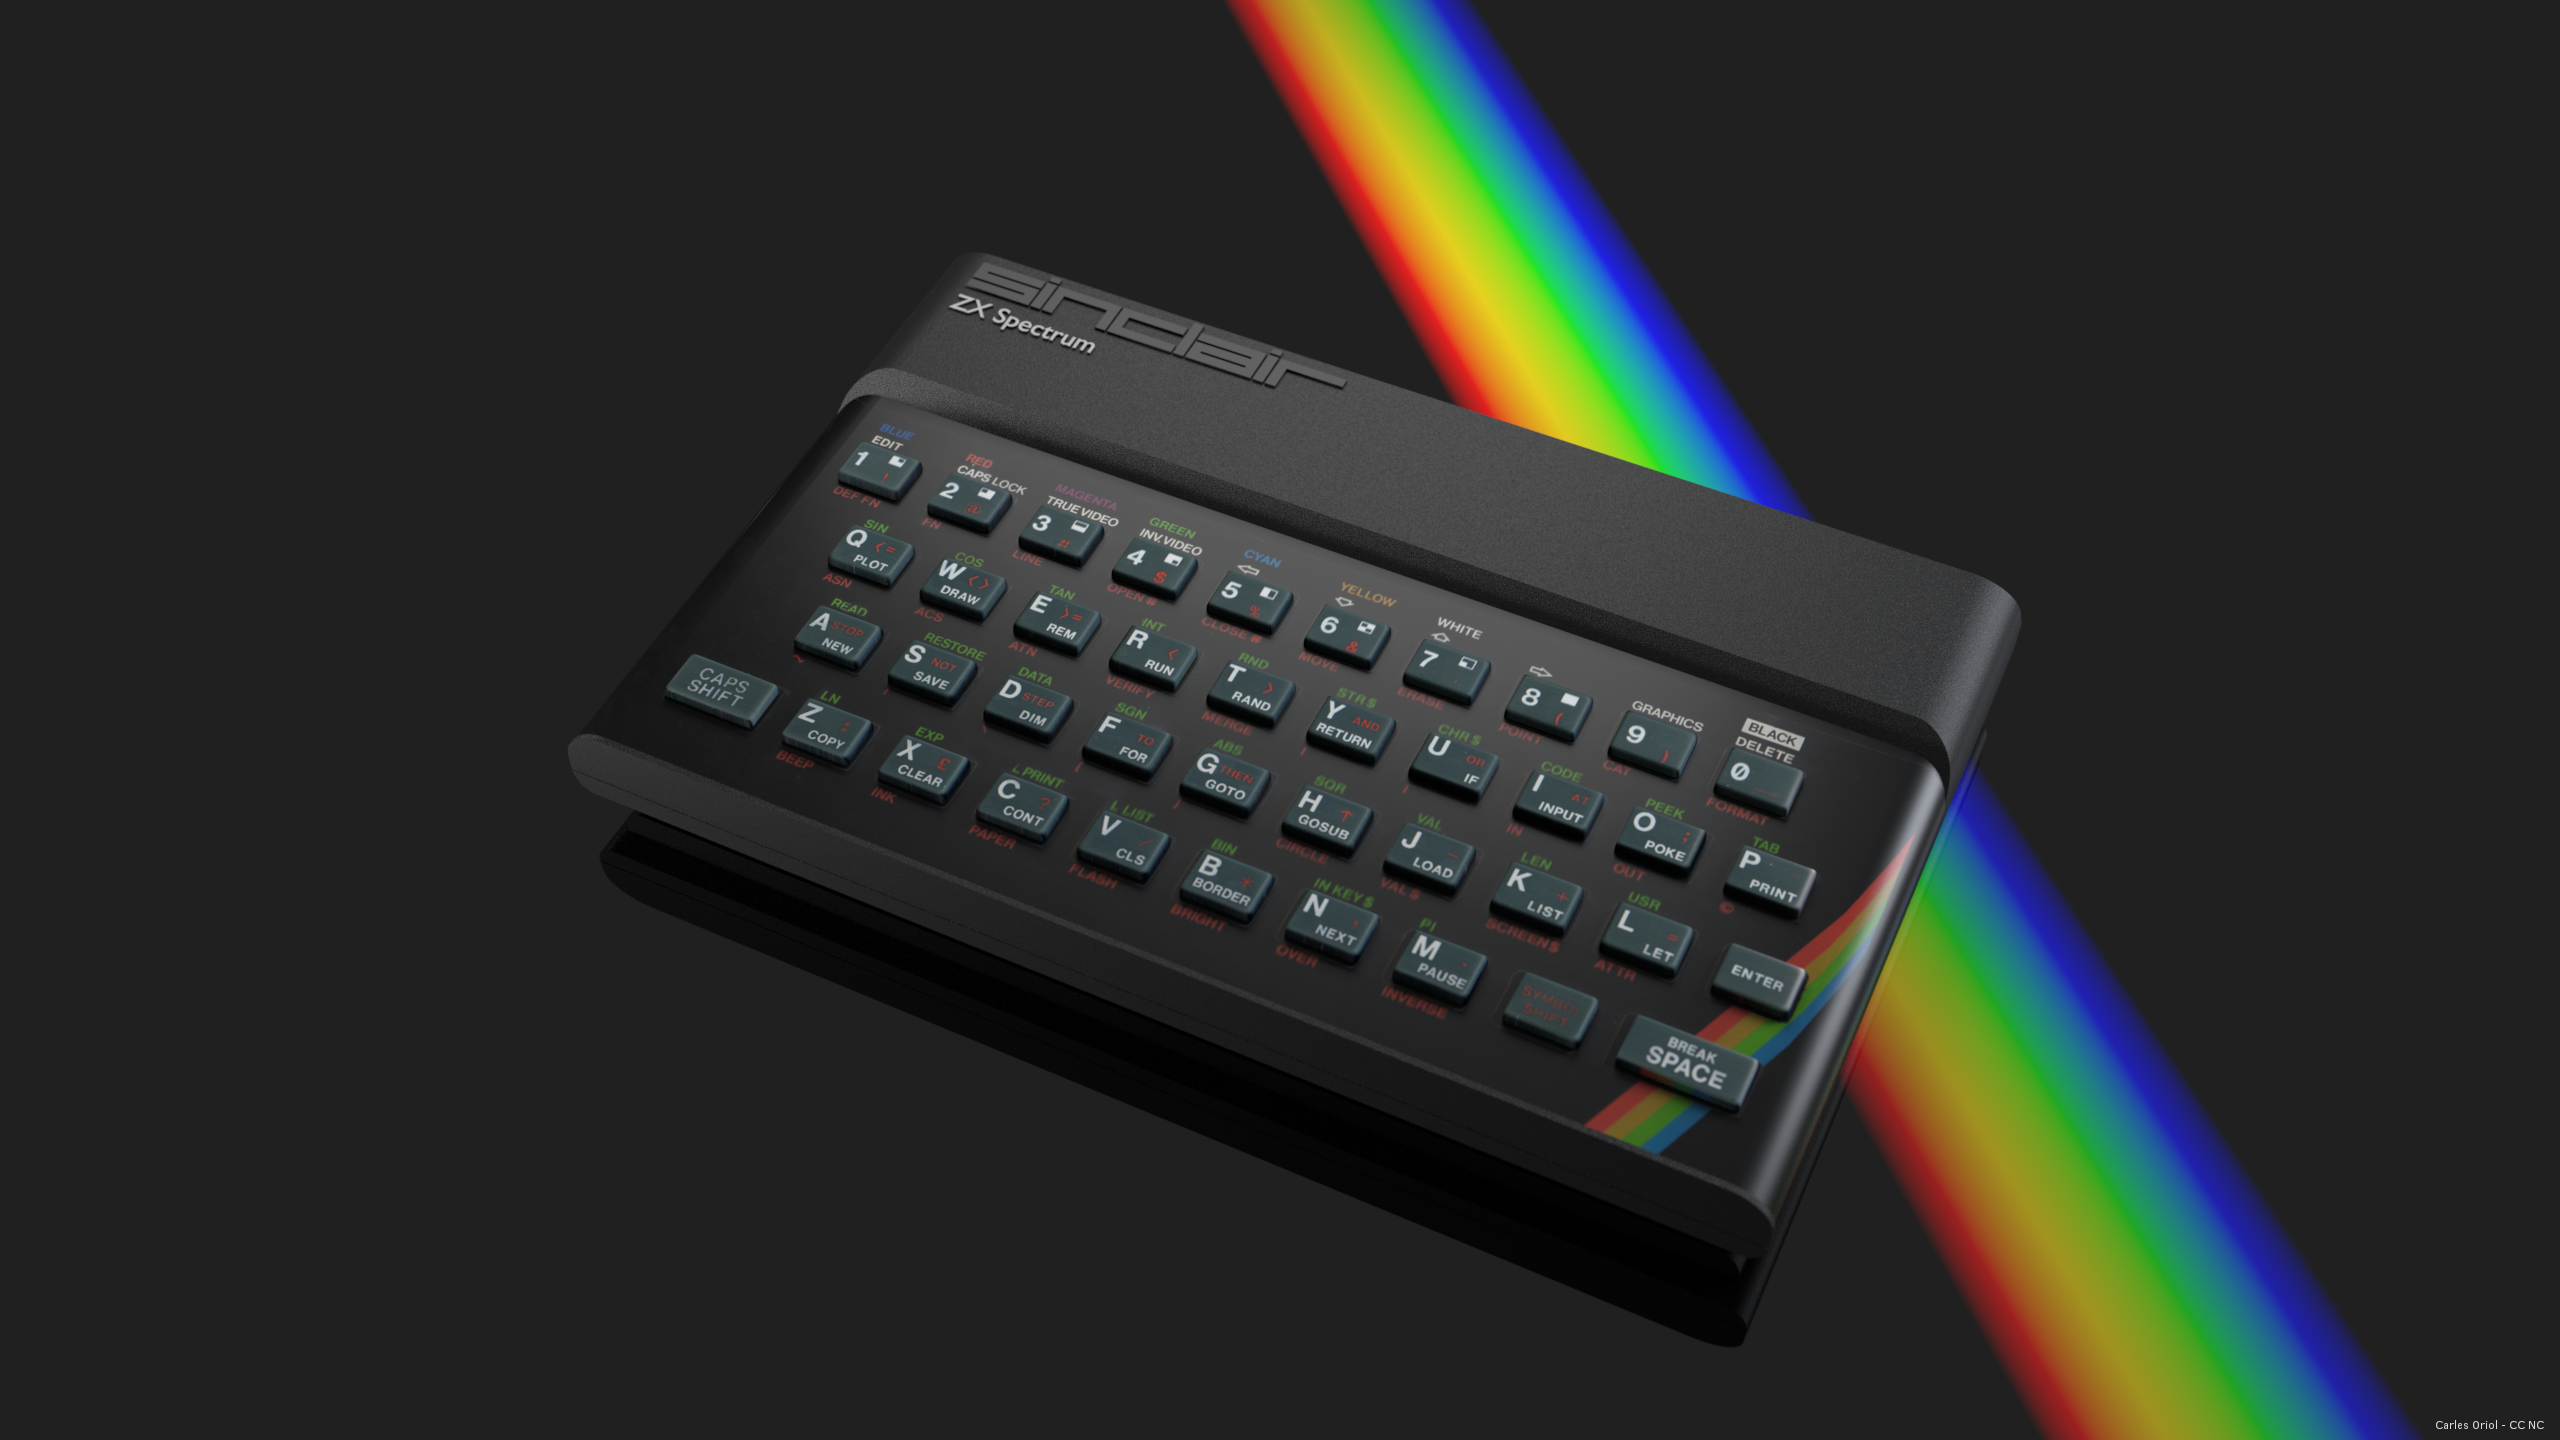 General 2560x1440 Zx Spectrum  keyboards technology closeup simple background digital art watermarked